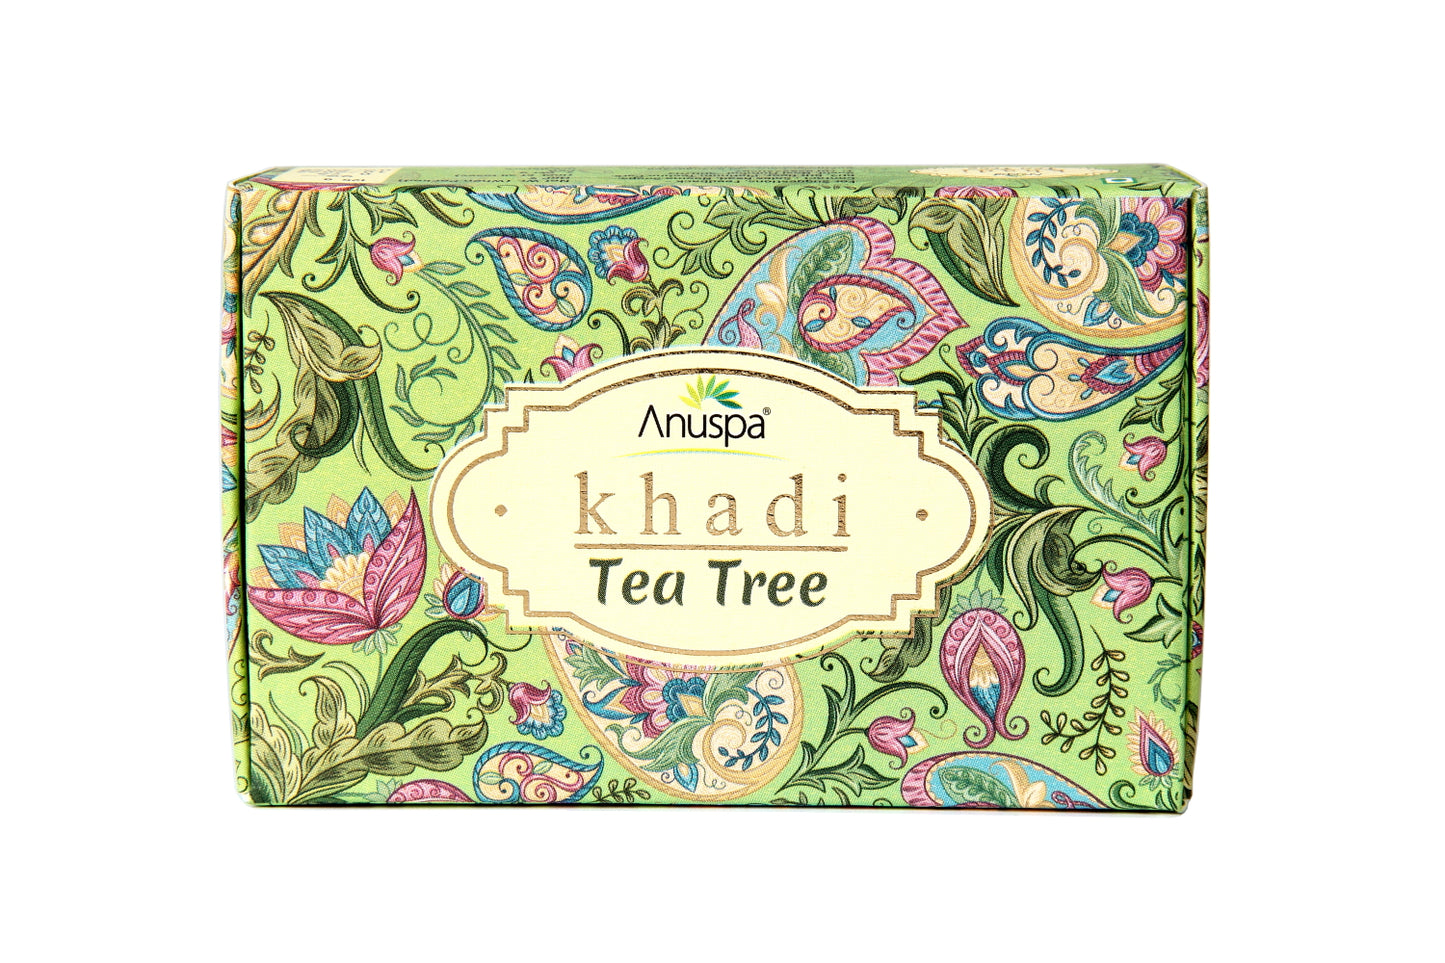 Anuspa Khadi Handcrafted Herbal Tea Tree Bathing Bar purifies the skin 125gms each (Pack of 6)